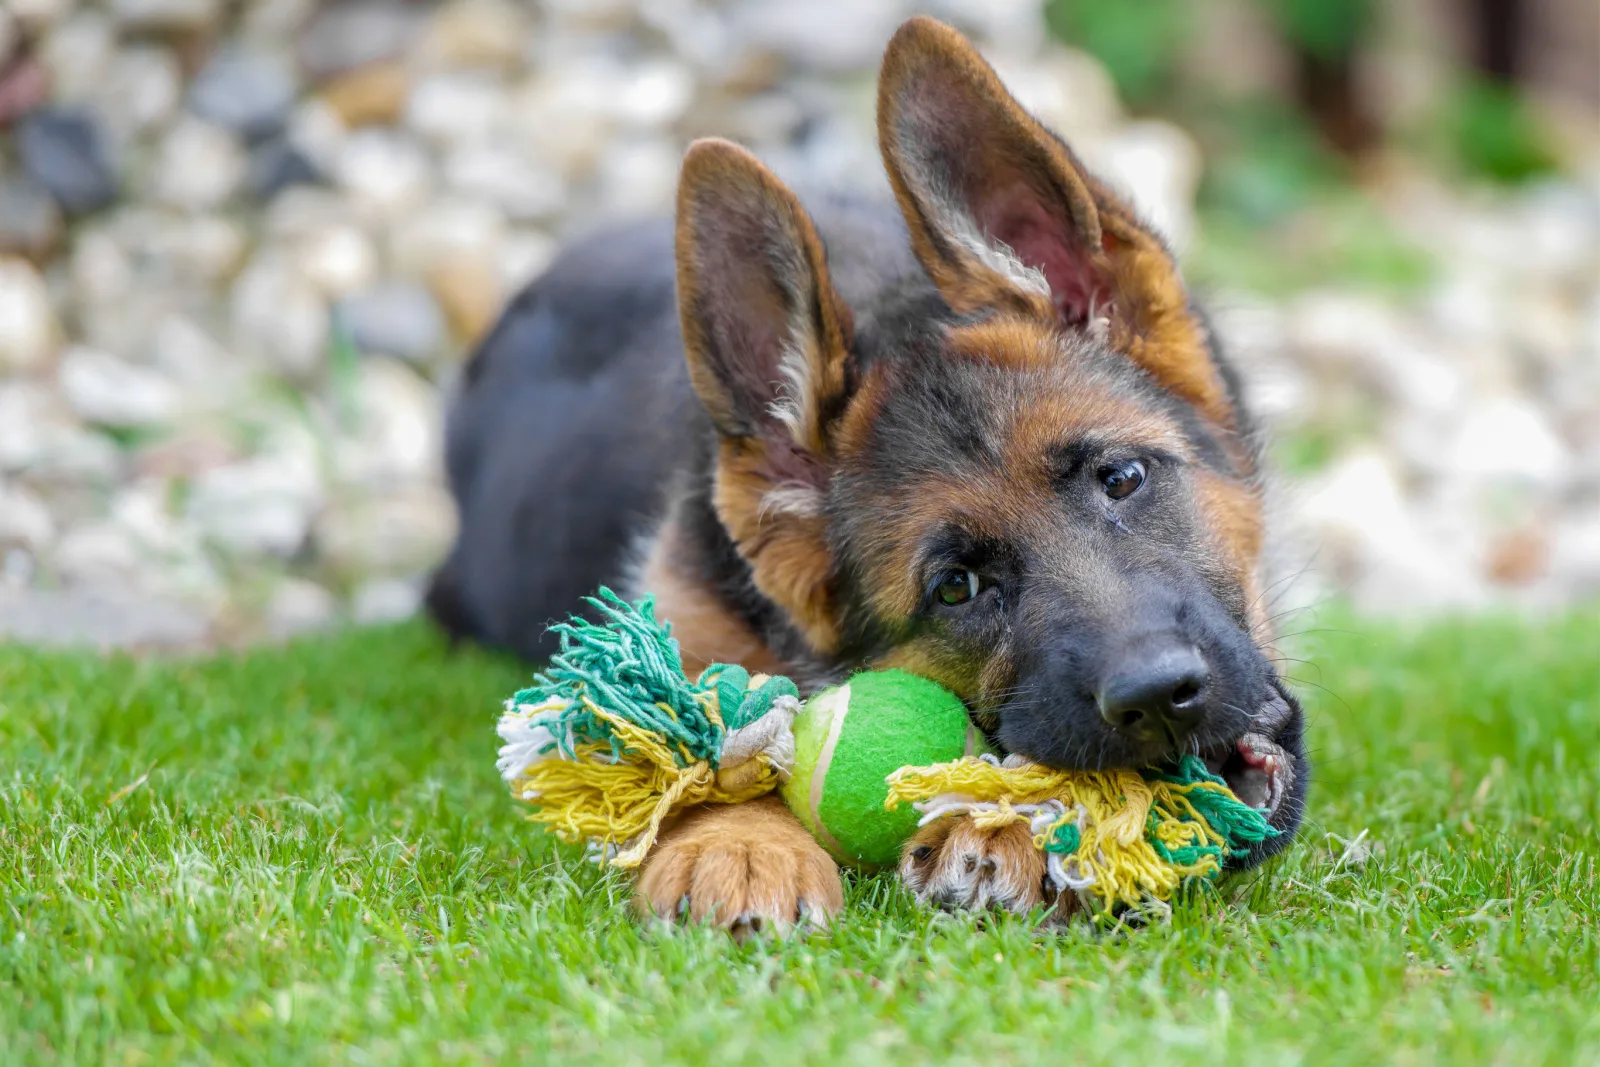 German Shepherd dog chewing on his toy